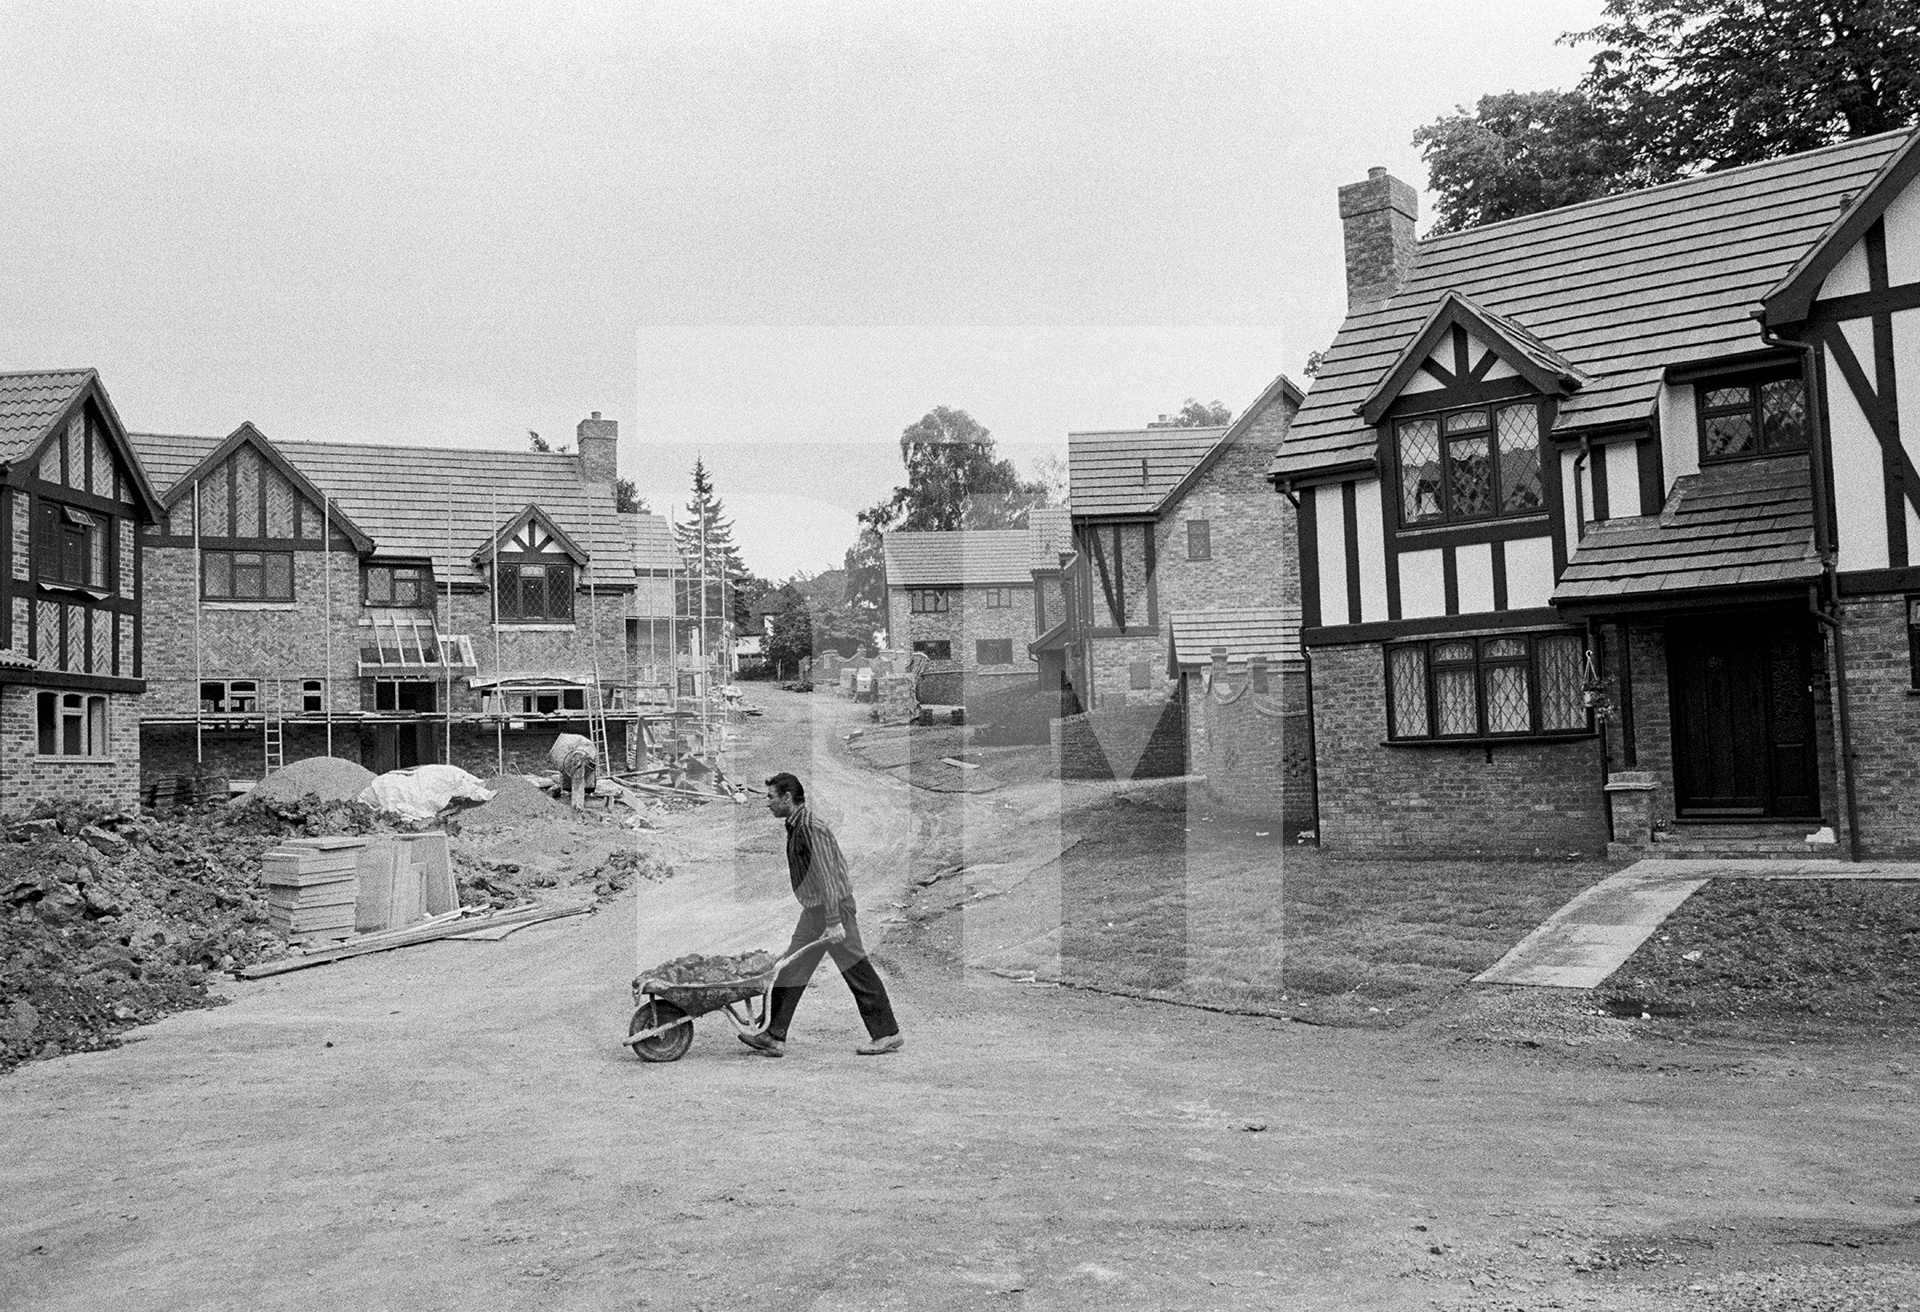 New Bovis Tudorbethan homes, Shortlands, Bromley. July 1984 by Daniel Meadows